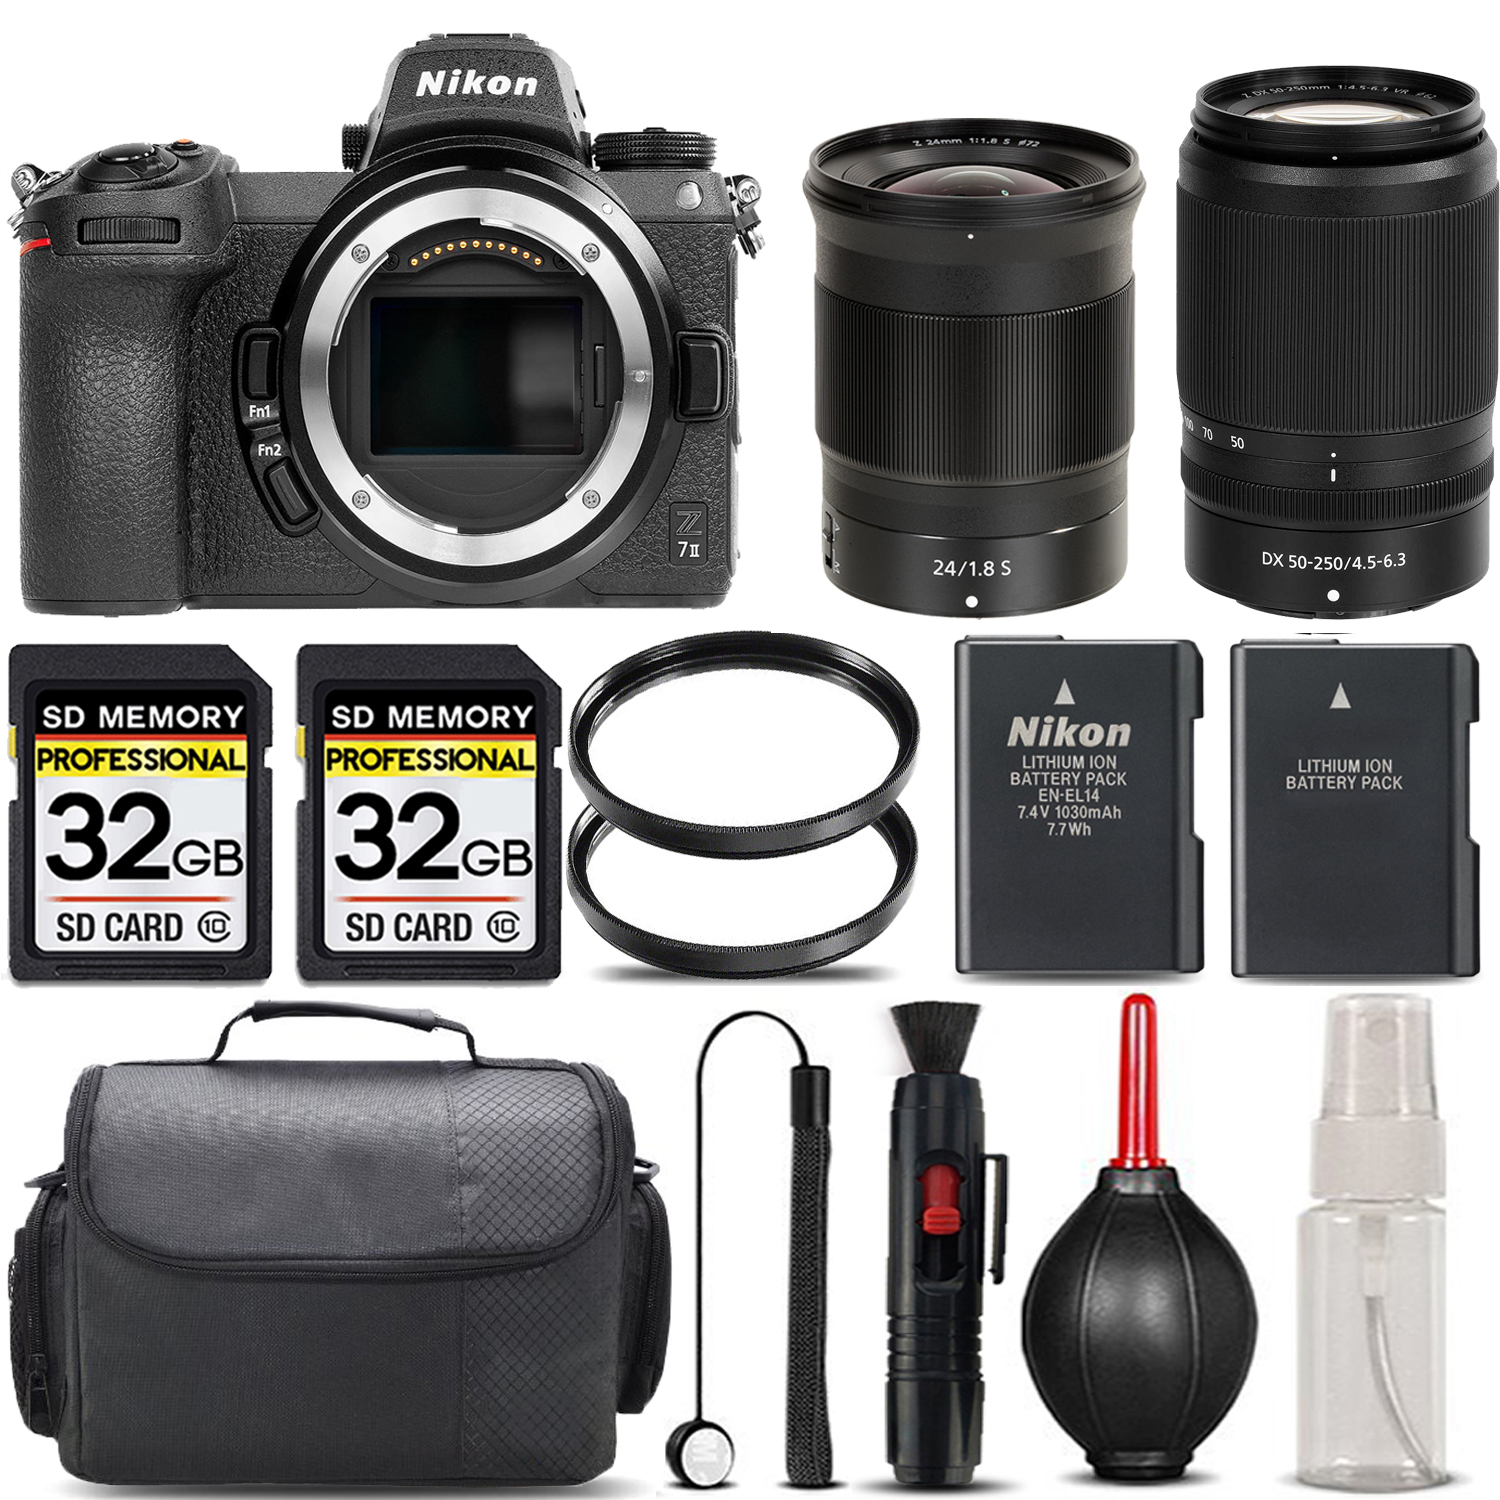 Z7 II + 50-250mm f/4.5-6.3 Lens + 24mm f/1.8 S Lens + Handbag - SAVE BIG KIT *FREE SHIPPING*